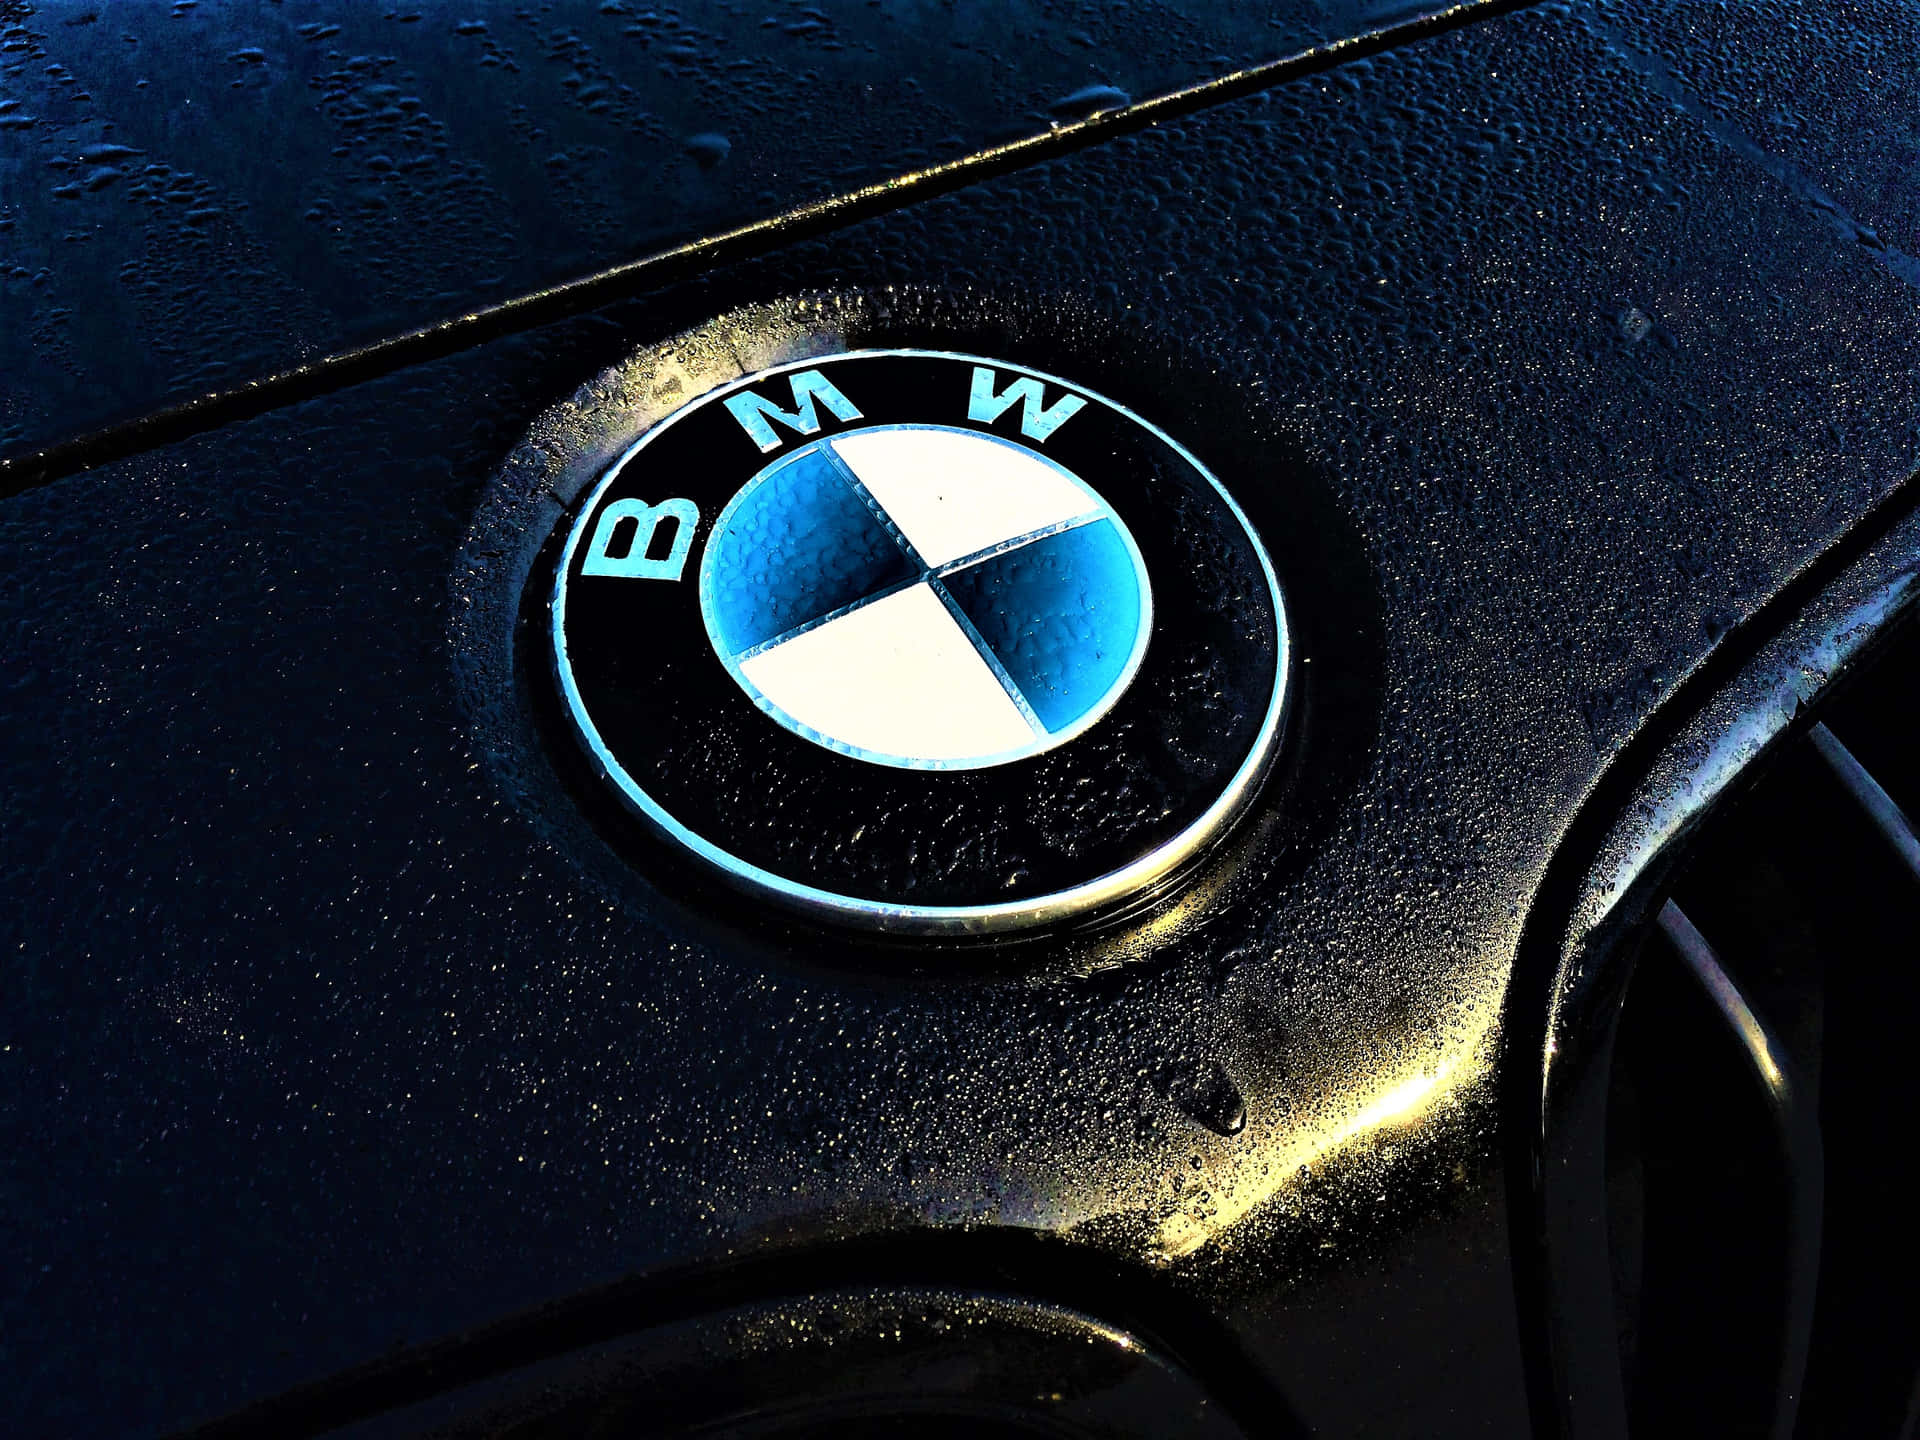 The iconic BMW logo